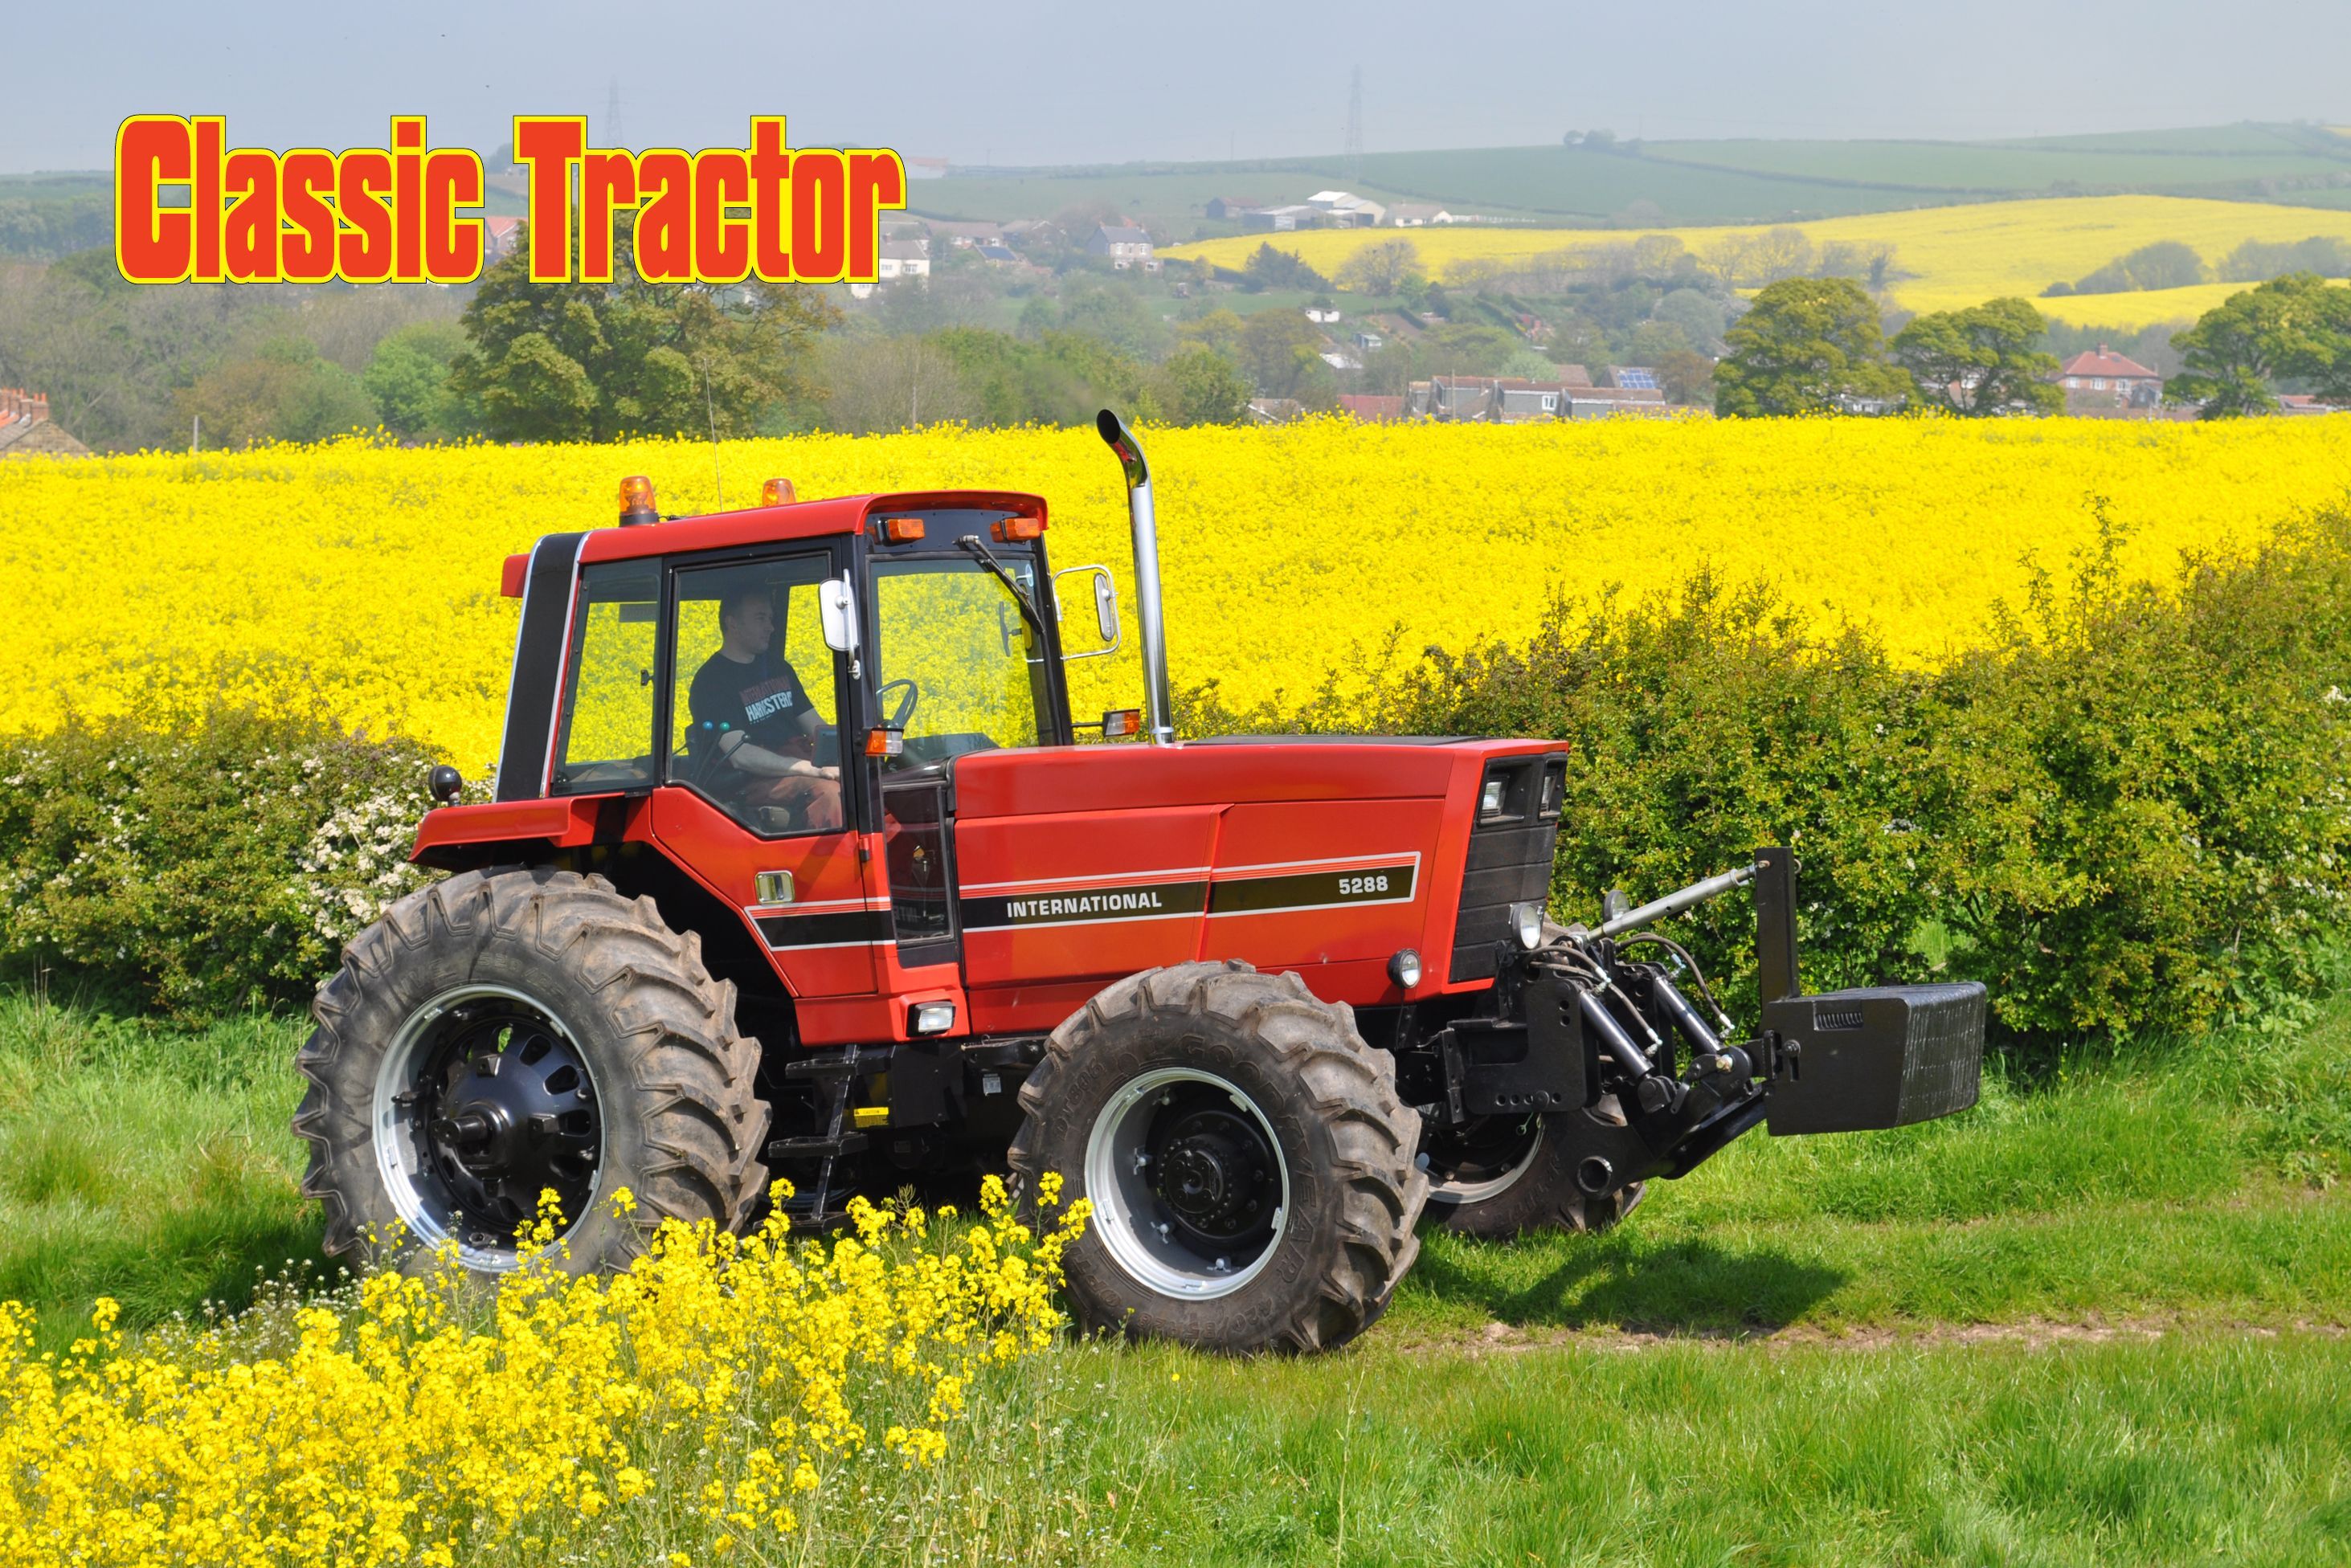 Wallpaper. CLASSIC TRACTOR MAGAZINE. Tractors, International tractors, Classic tractor